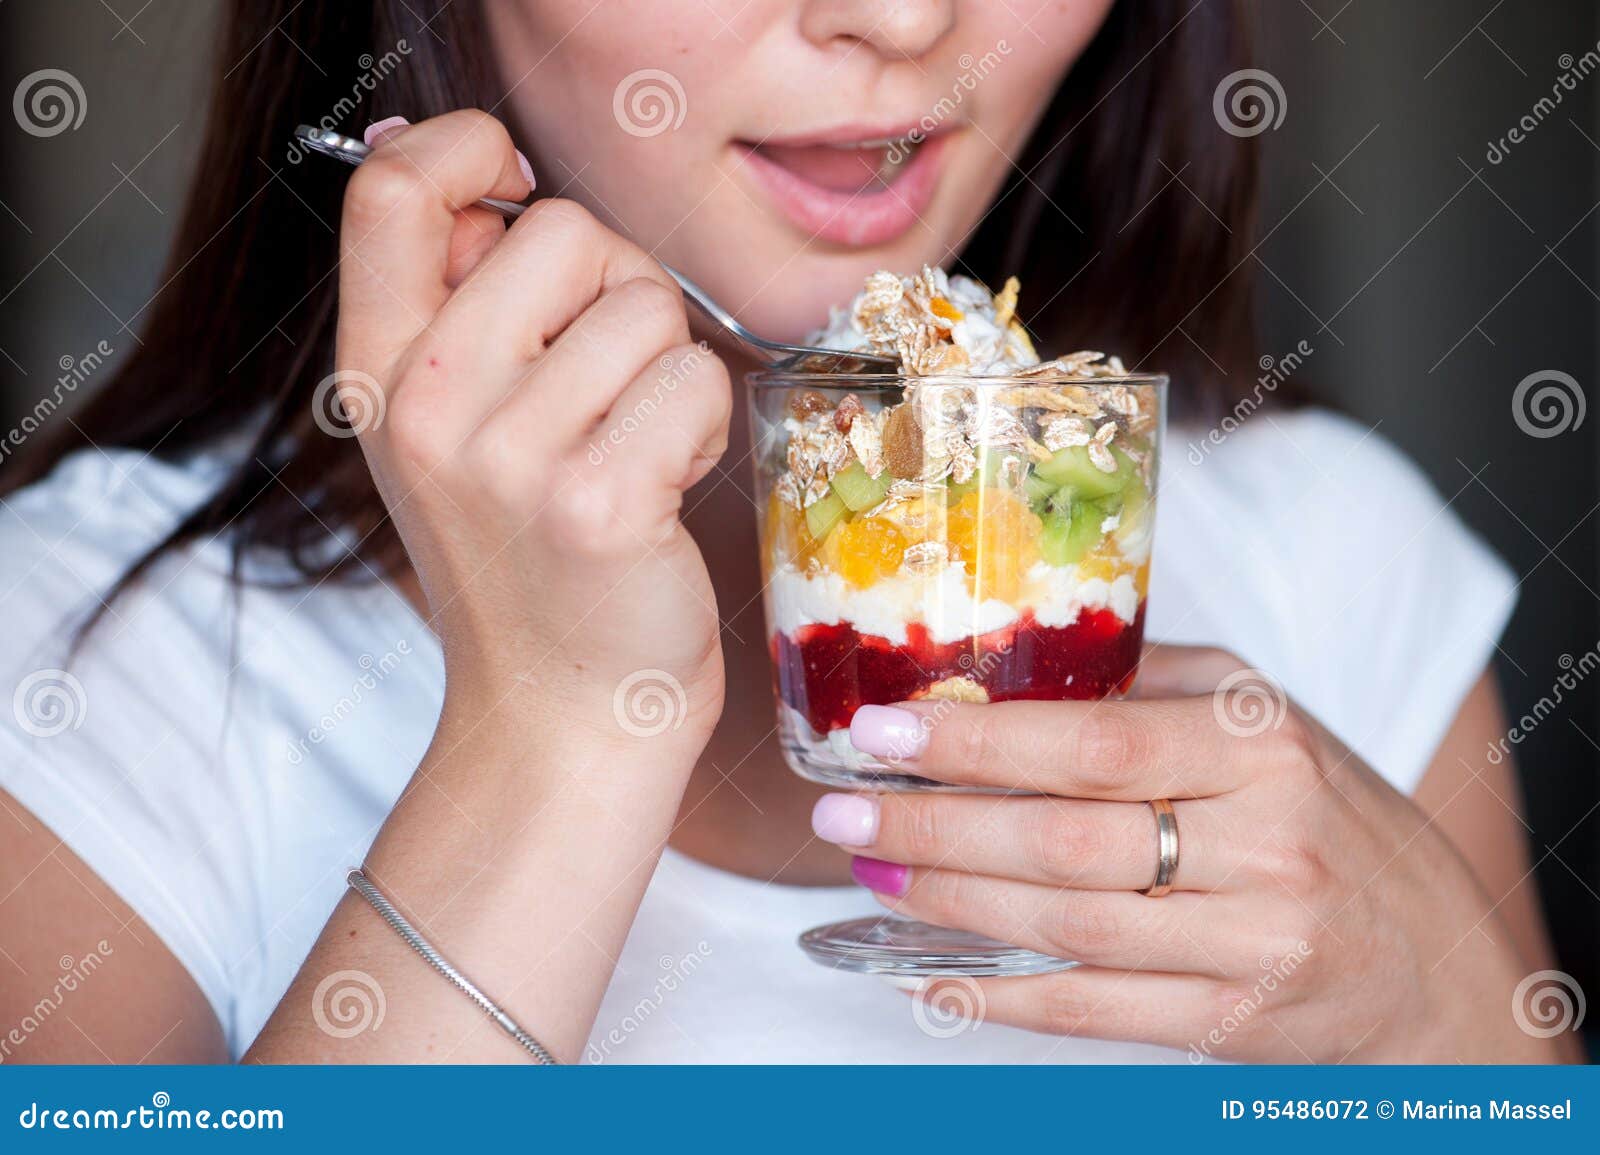 Eating Dessert Close Up Woman Tasting Creamy Dessert Stock Photo